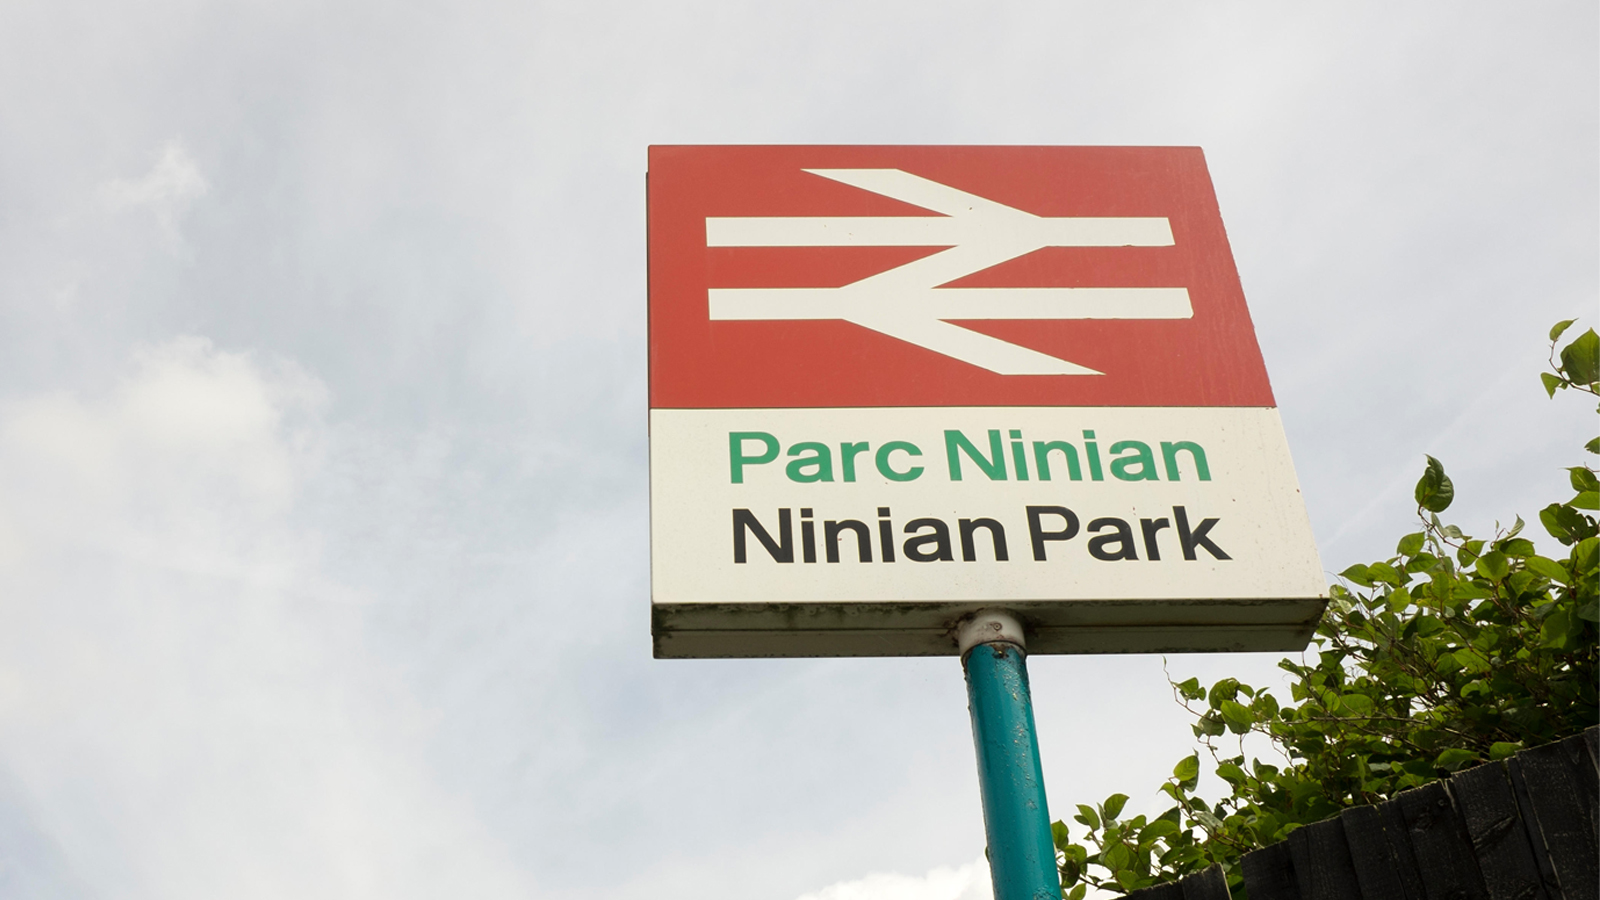 Ninian Park train station